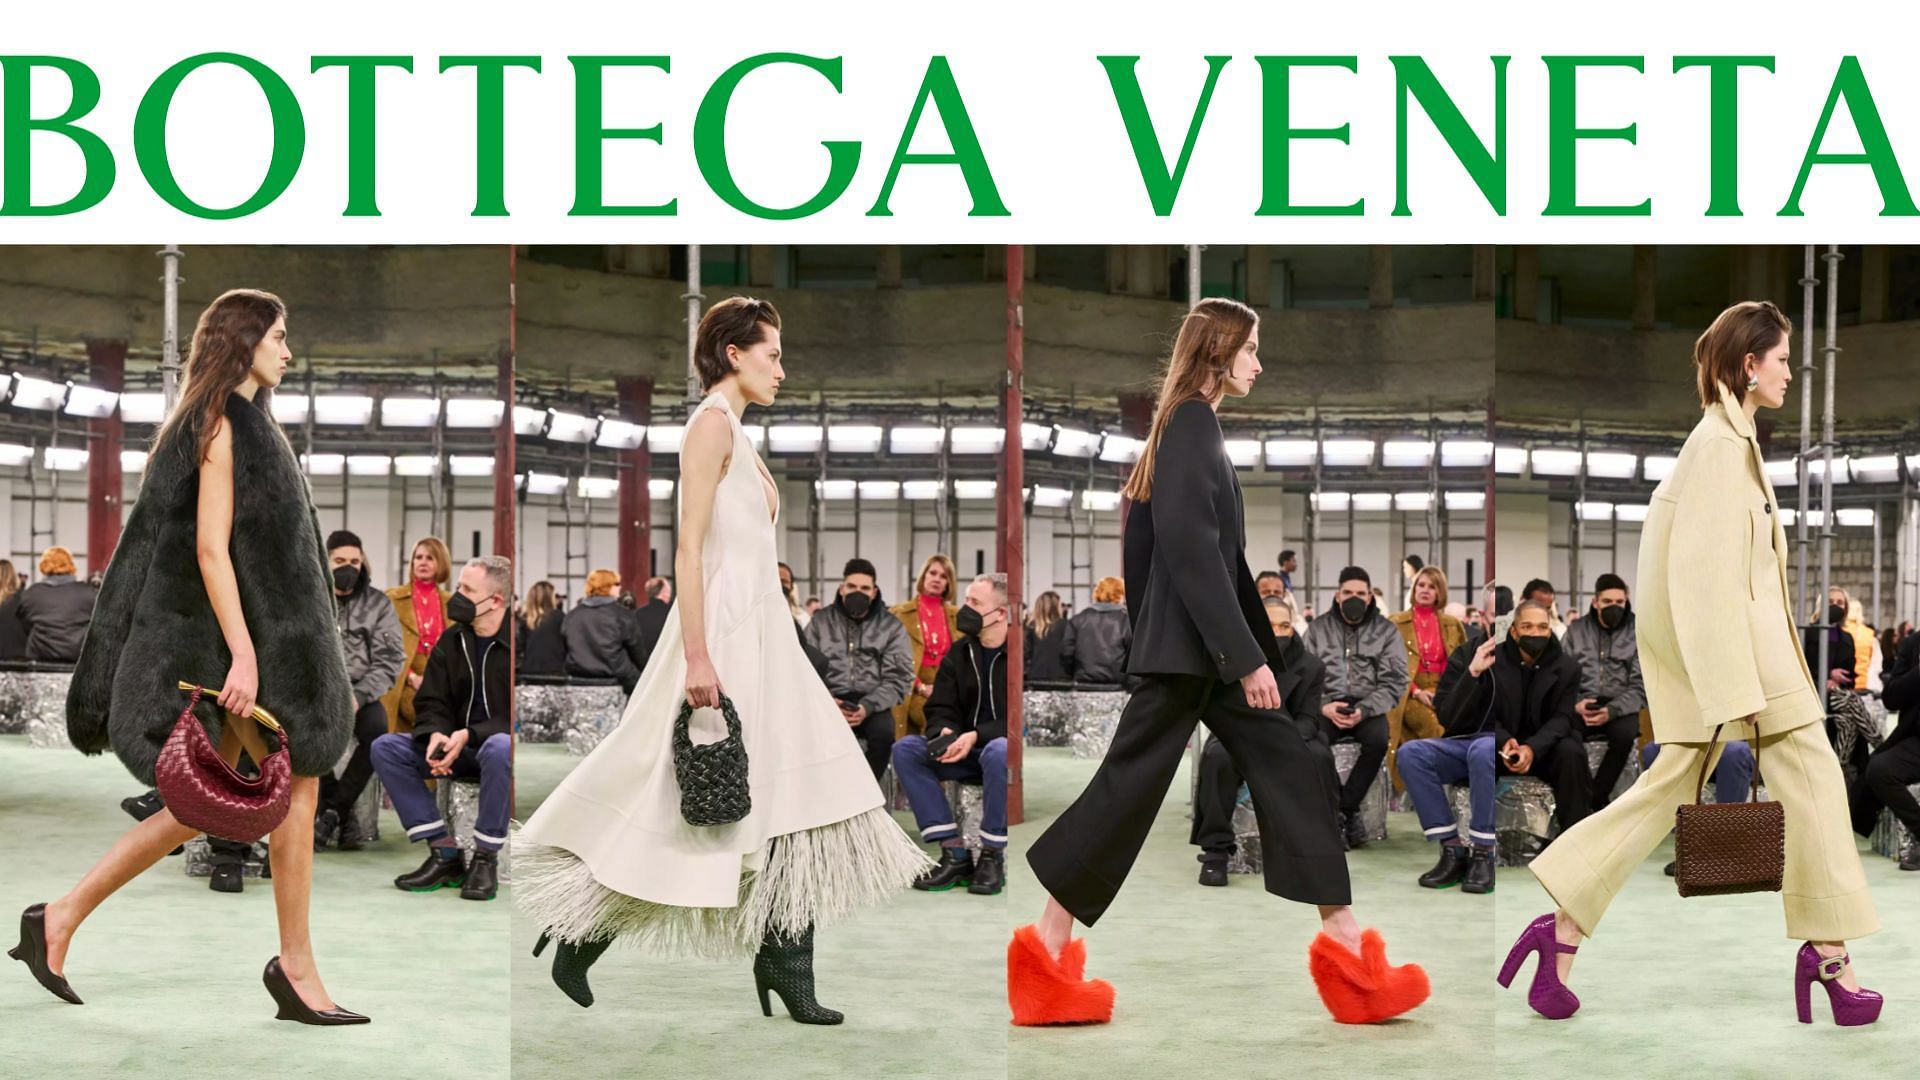 Bottega Veneta Fall Winter Ready-to-wear Runway show (Image via Sportskeeda)